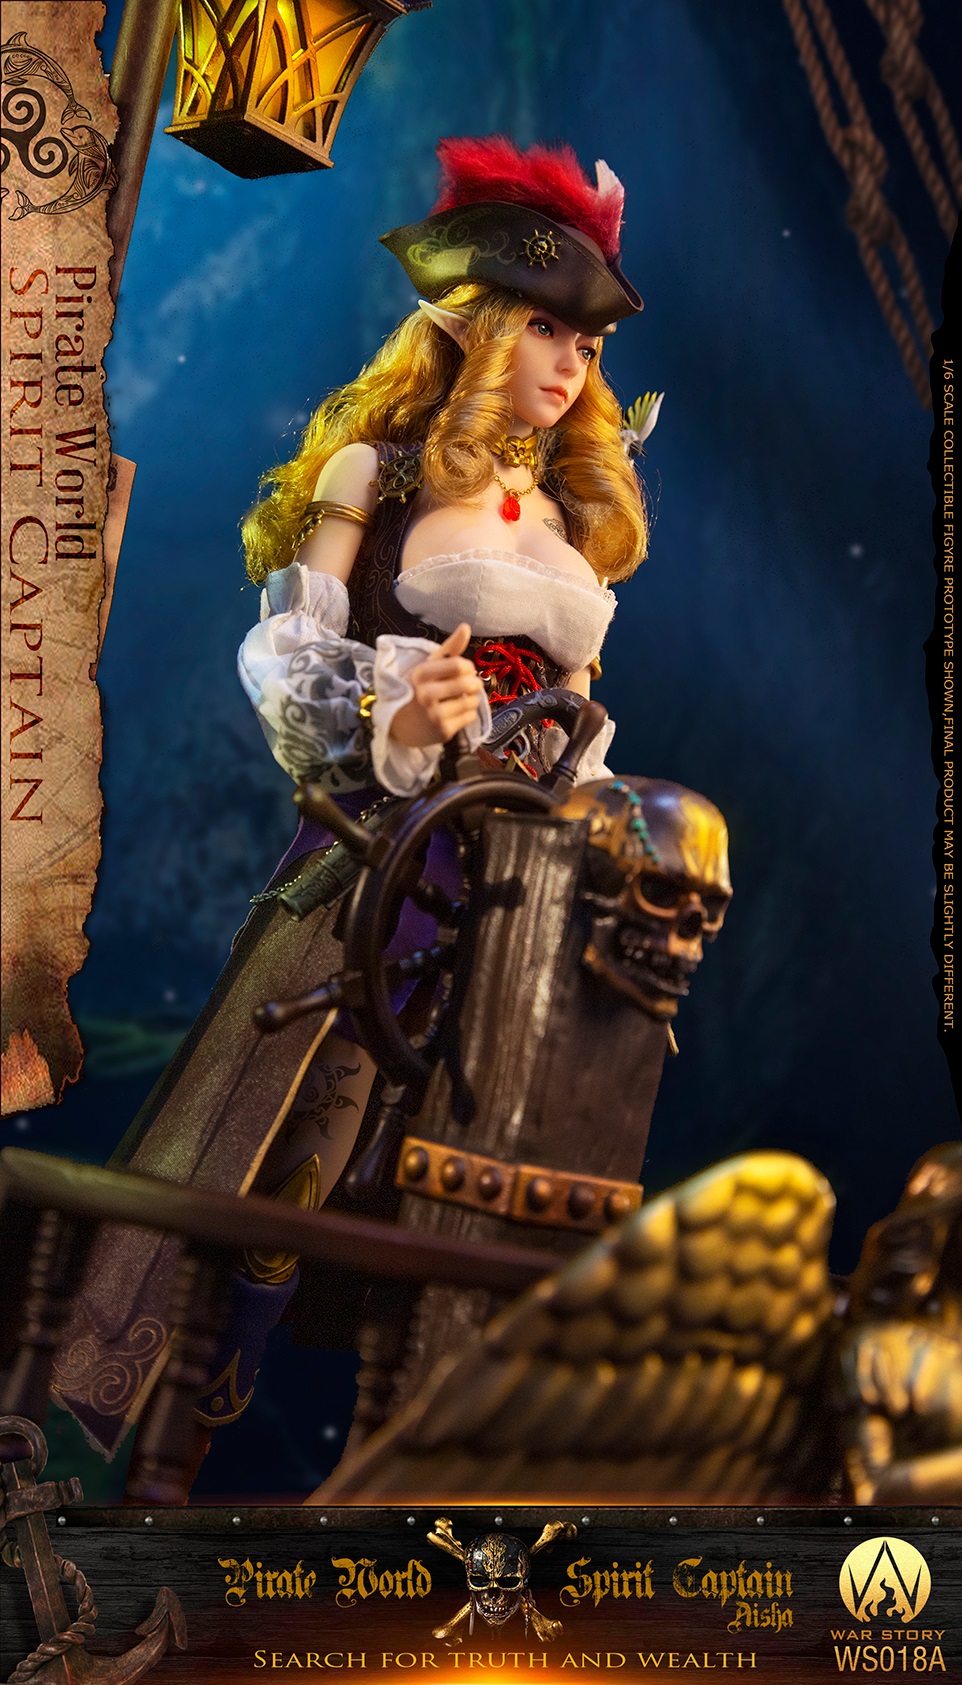 Base - NEW PRODUCT: War Story: 1/6 Pirate World: Spirit Captain Aisha / Elsa Action Figure/Pirate Ship Luminous Base (WS018A/B)  10452310